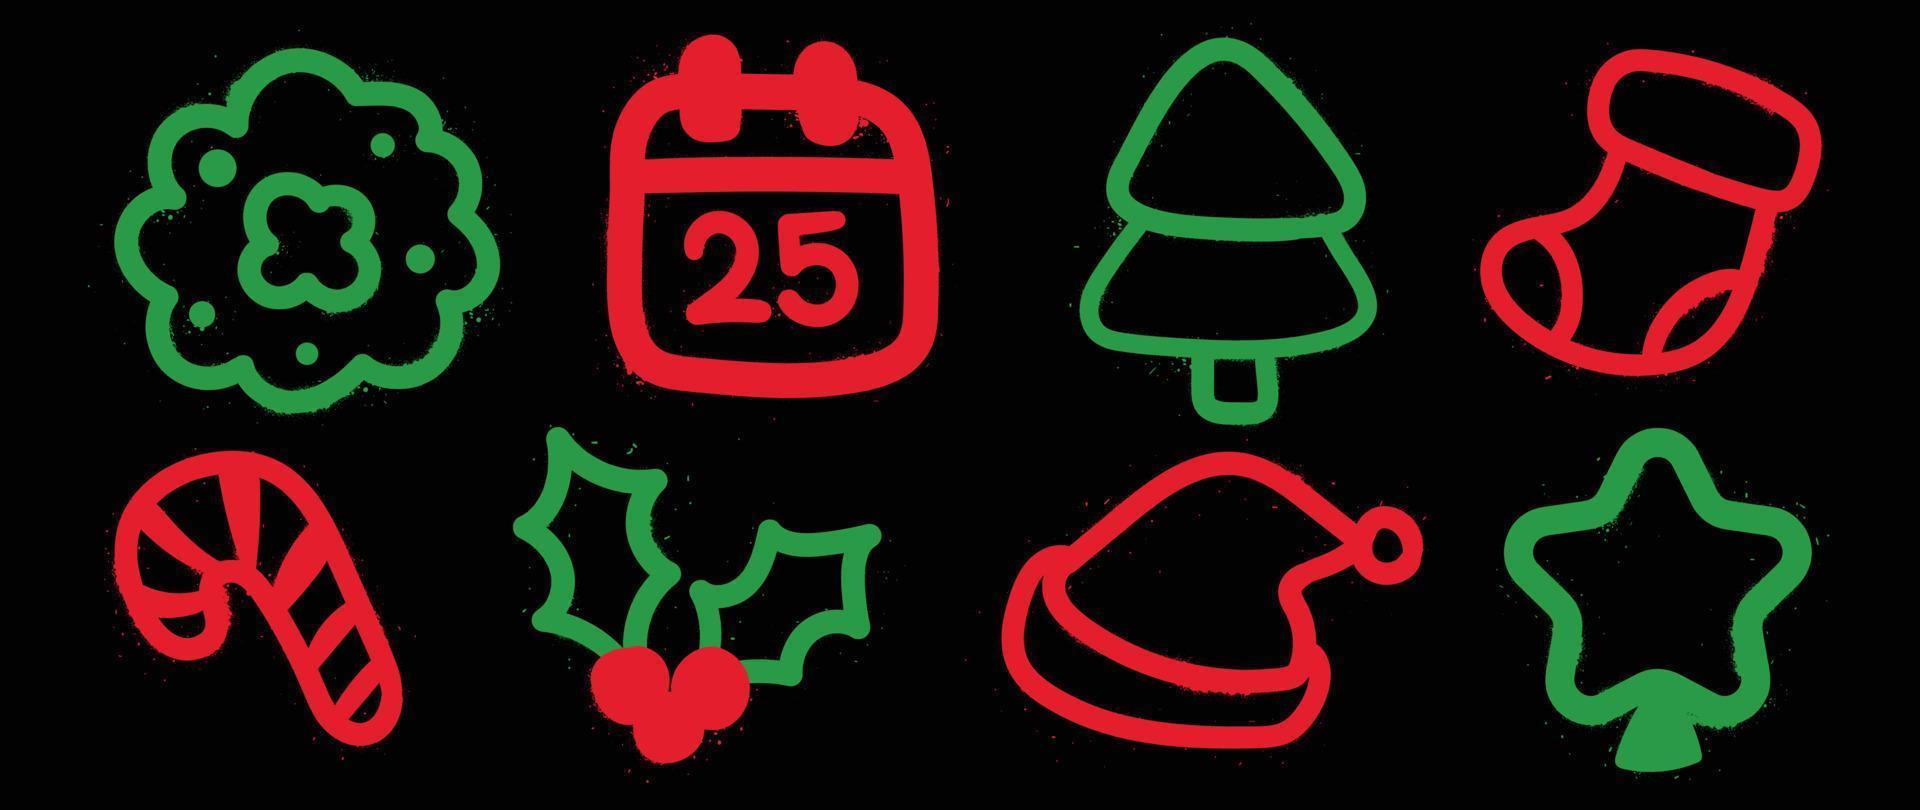 conjunto de elementos navideños vector de pintura en aerosol. graffiti, grunge, elementos brillantes de sombrero de santa, bastón de caramelo, calcetín, árbol, acebo sobre fondo negro. ilustración de diseño para decoración, tarjeta, pegatina.